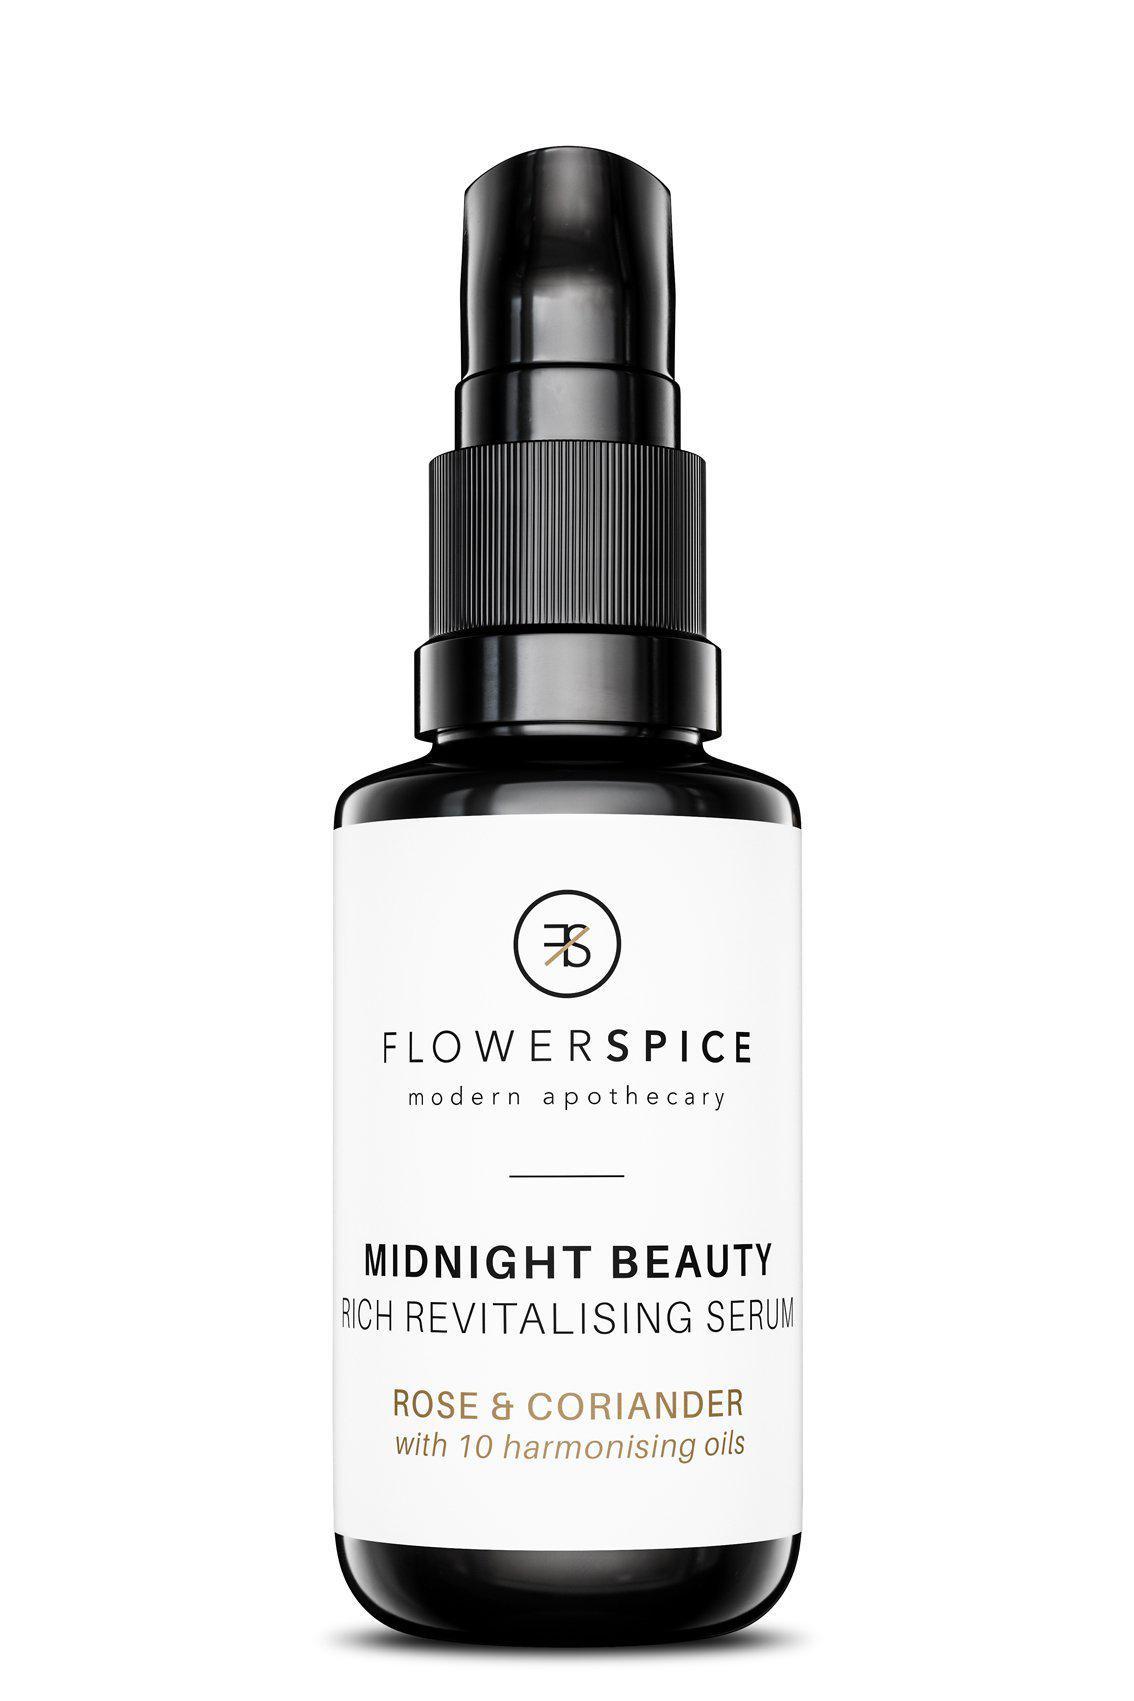 Indisponible : Sérum Éclat - Midnight Beauty Nicht verfügbar: Radiance Serum - Midnight Beauty - Flower and Spice